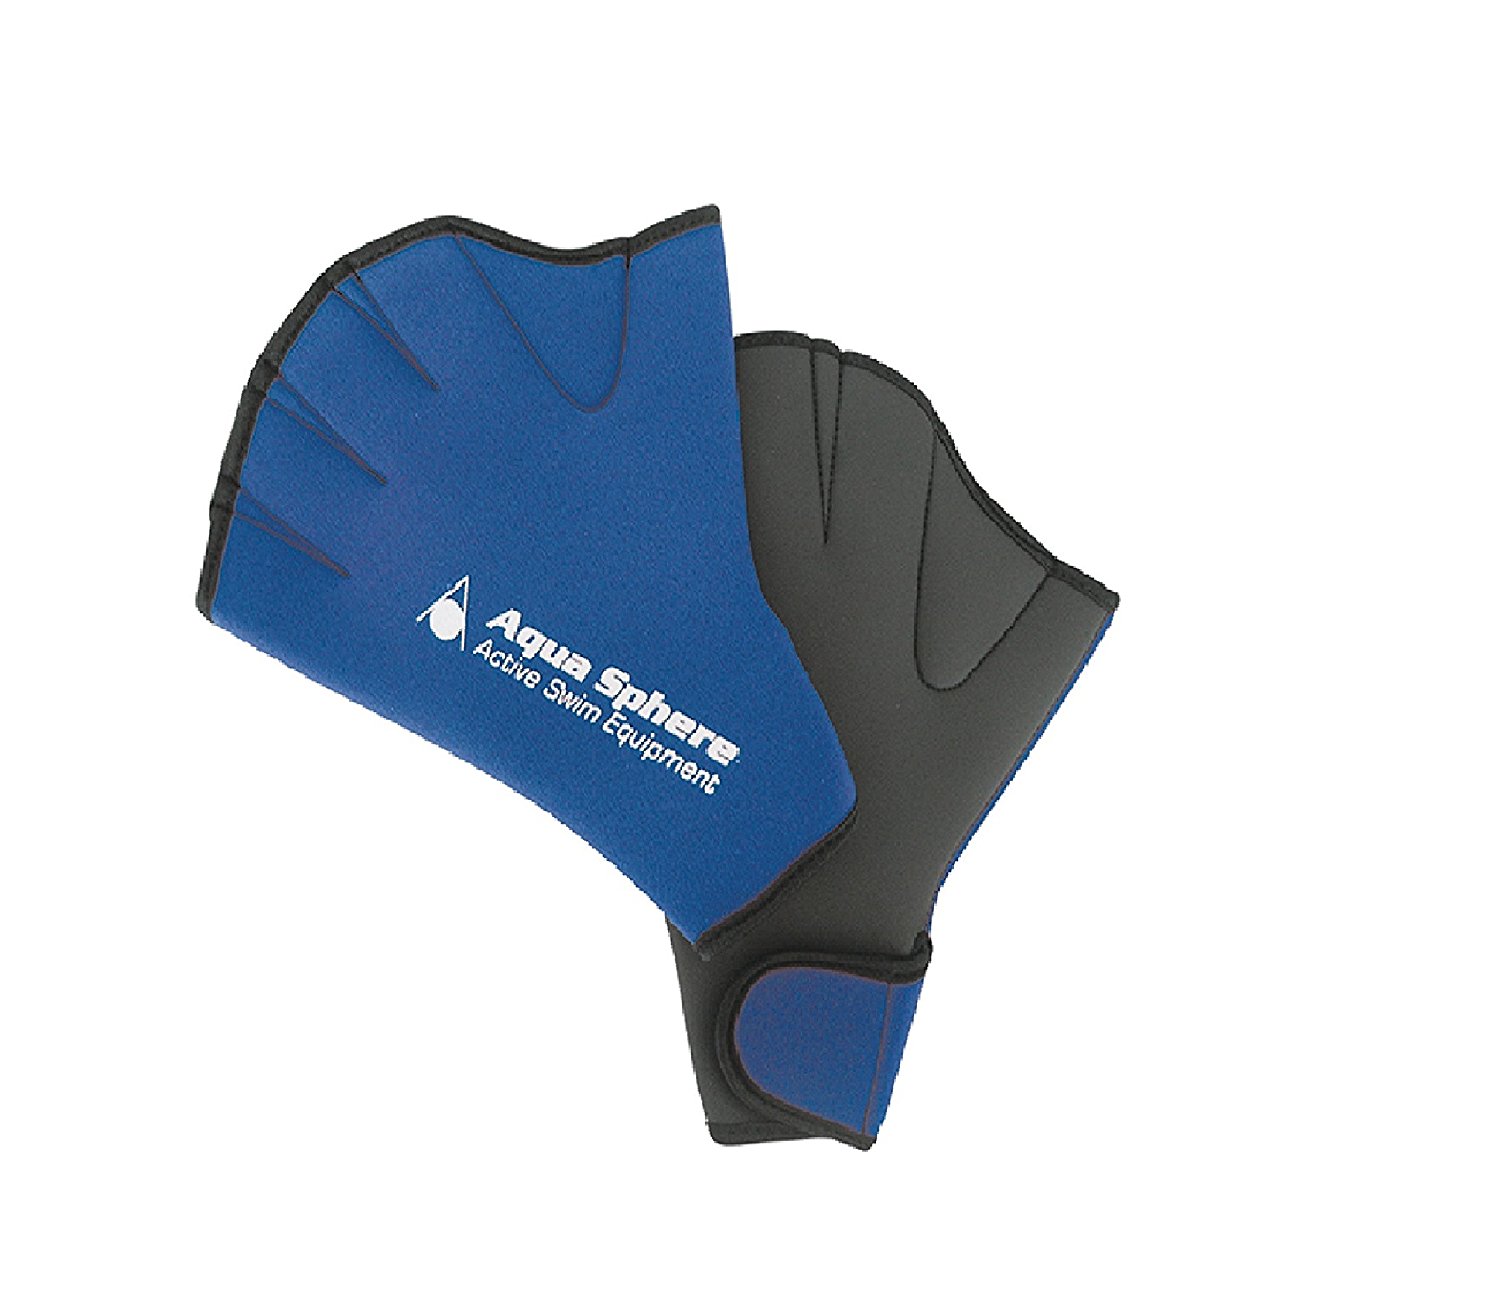 Head SWIM GLOVE Schwimmhandschuh Trainingshilfe Aqua Fitness Handschuh 